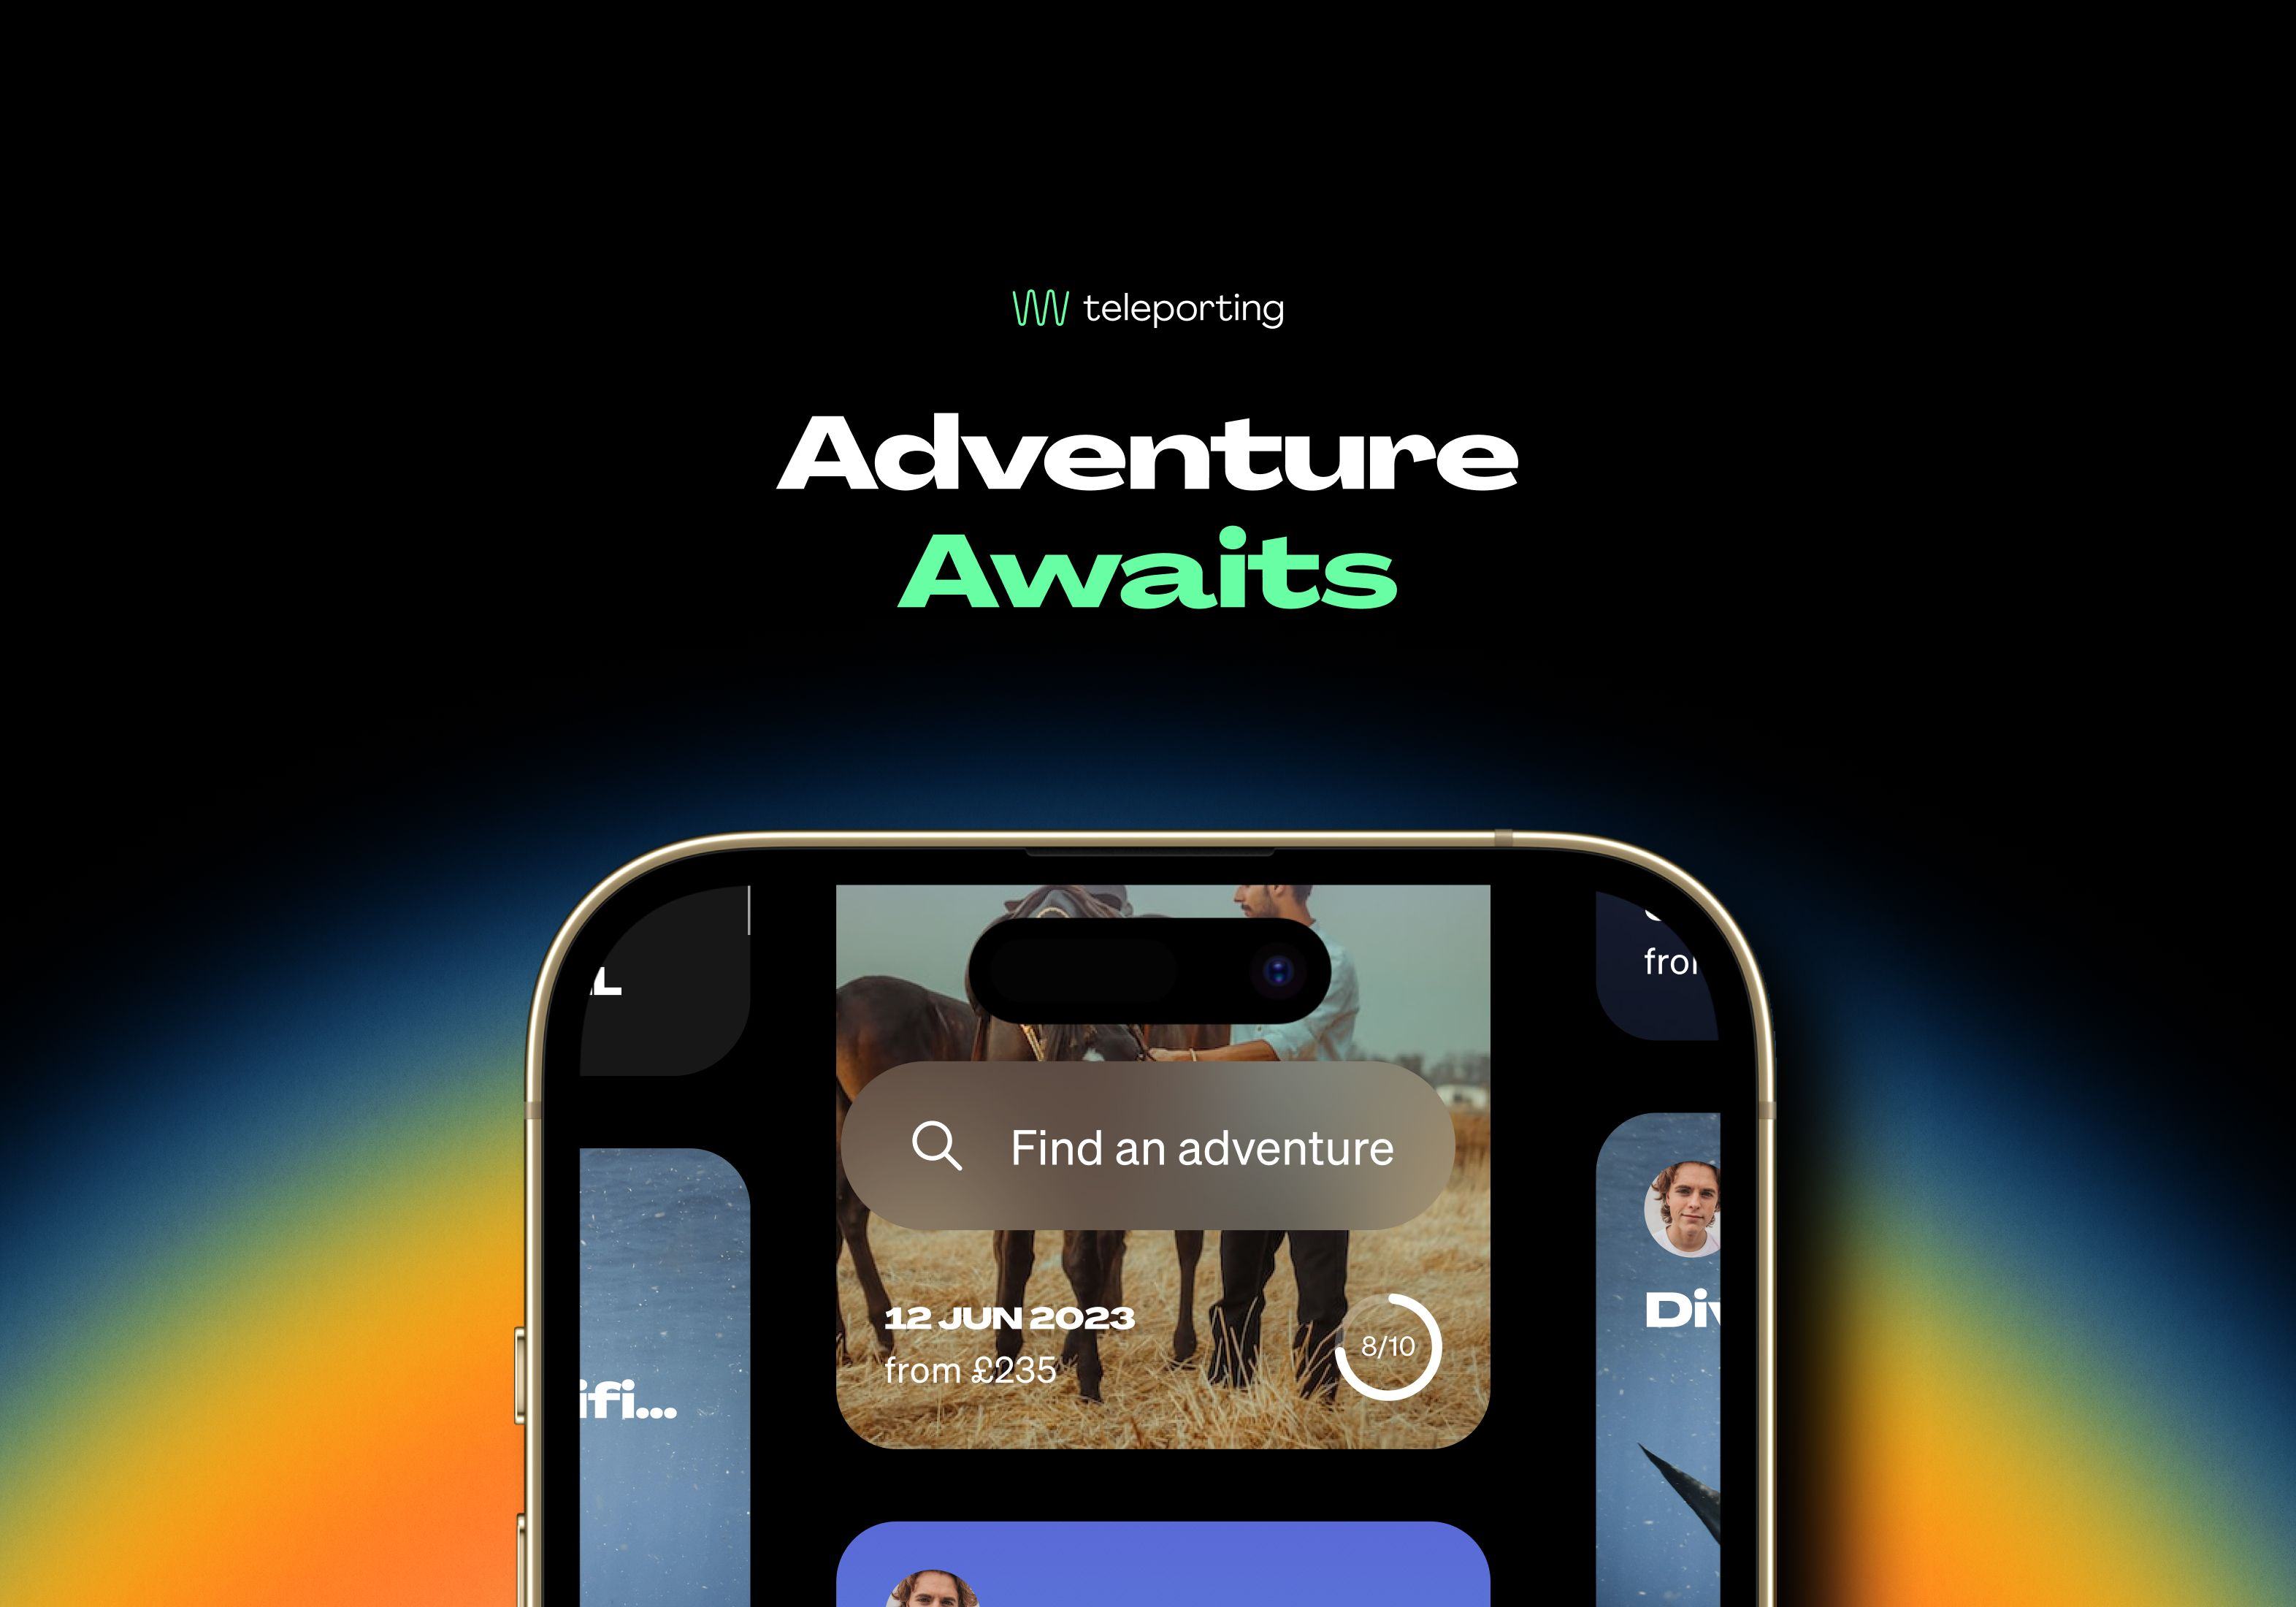 Teleporting Adventure App Advert